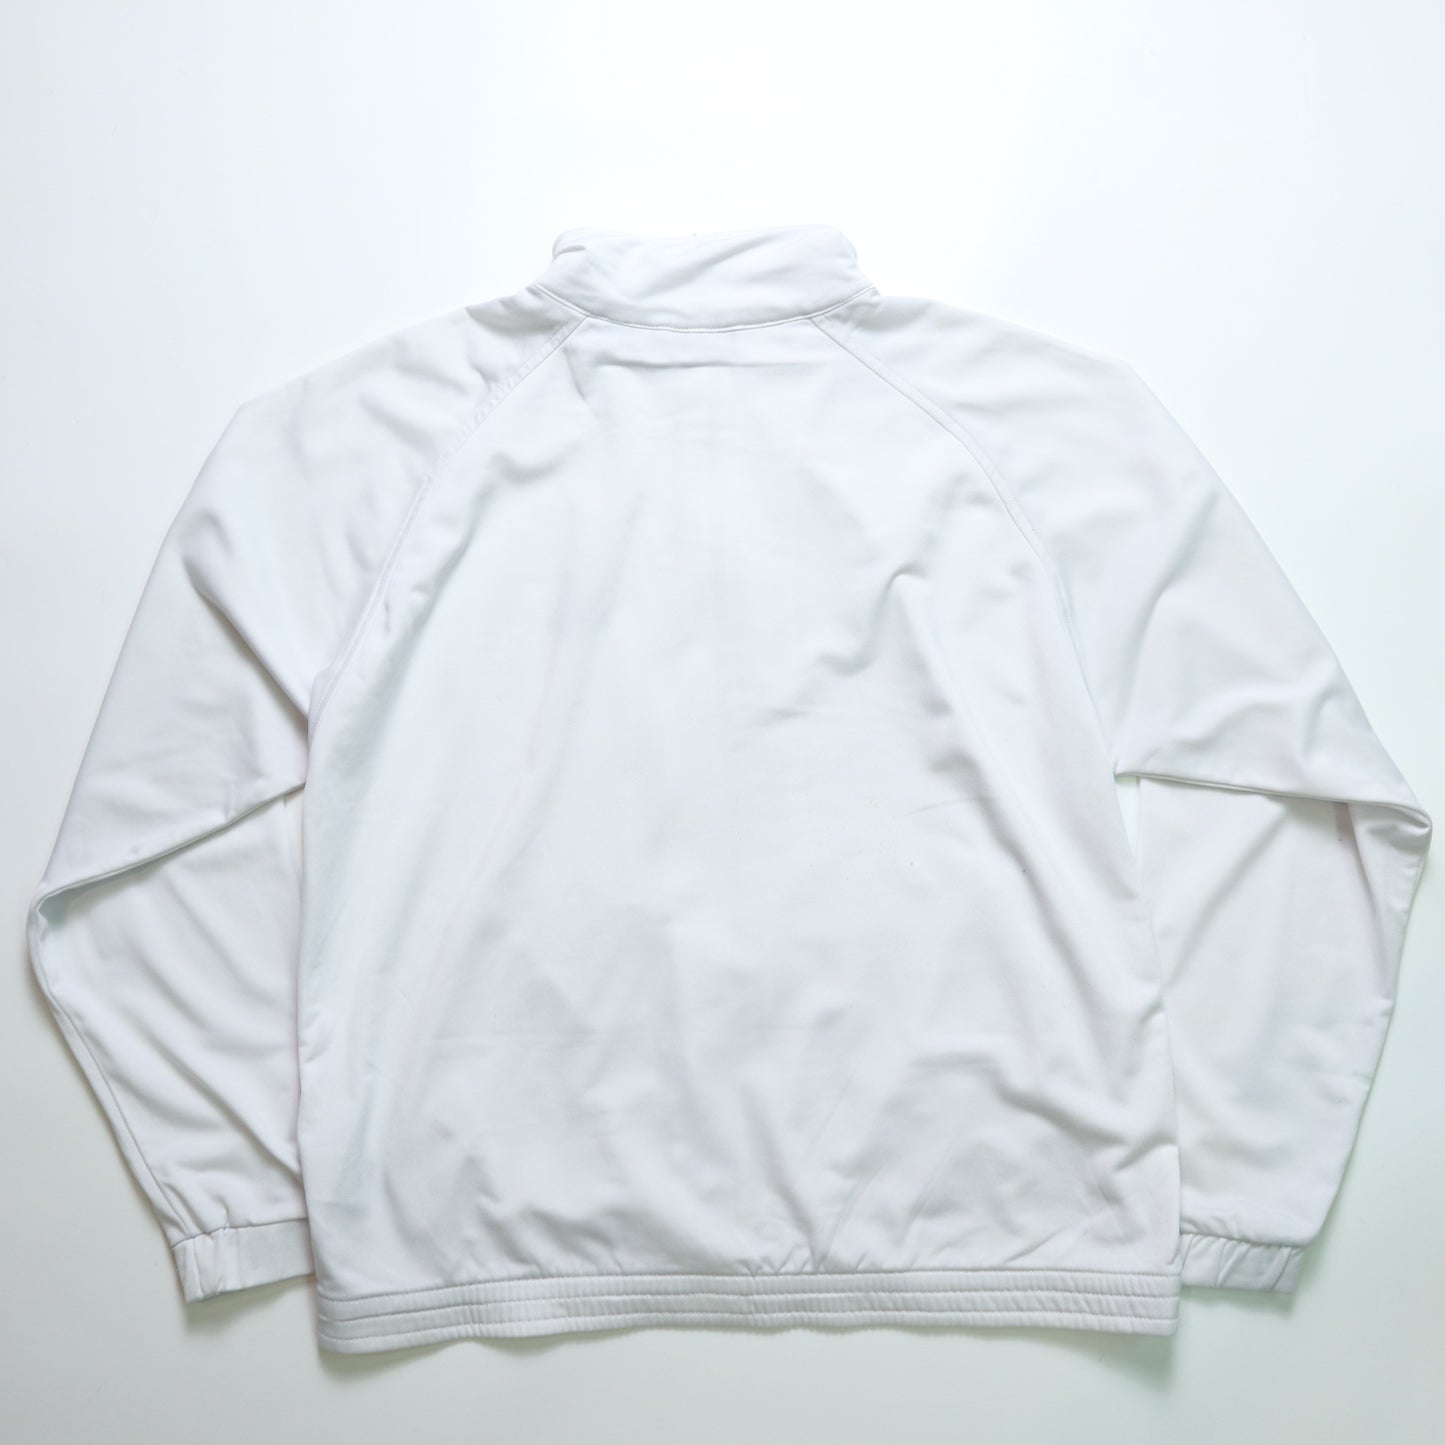 White FILA Sports Jacket